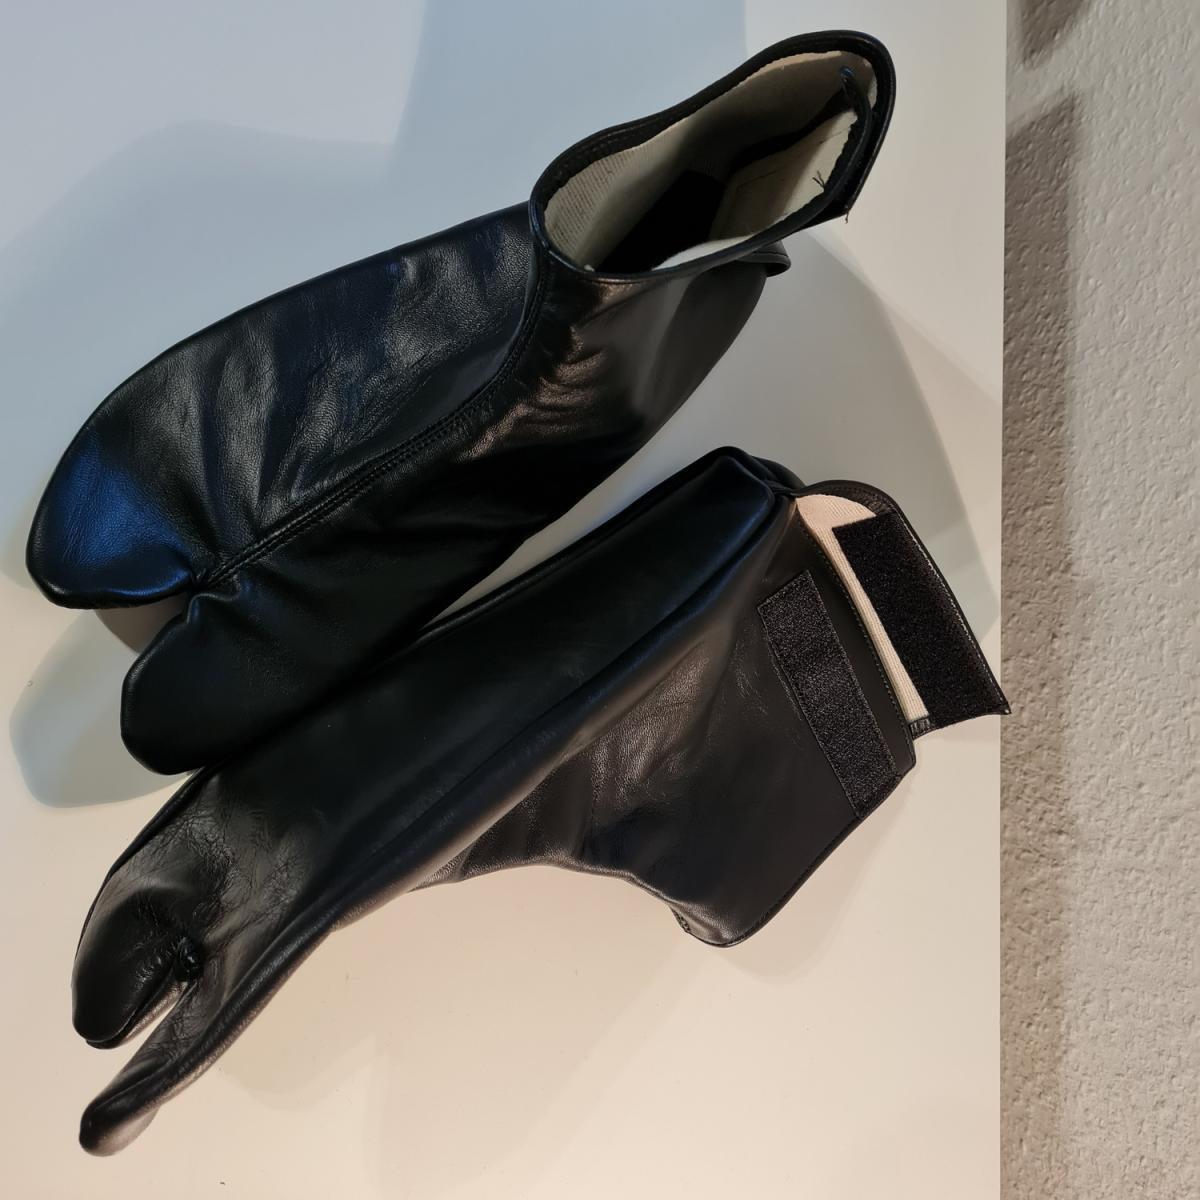 Tabi socks made of leather - Size 45 ➤ www.bokken-shop.de✅ Suitable for Aikido, Iaido, Kendo, Bujinkan, Koryu, Jodo✔  Your Budo specialist dealer!